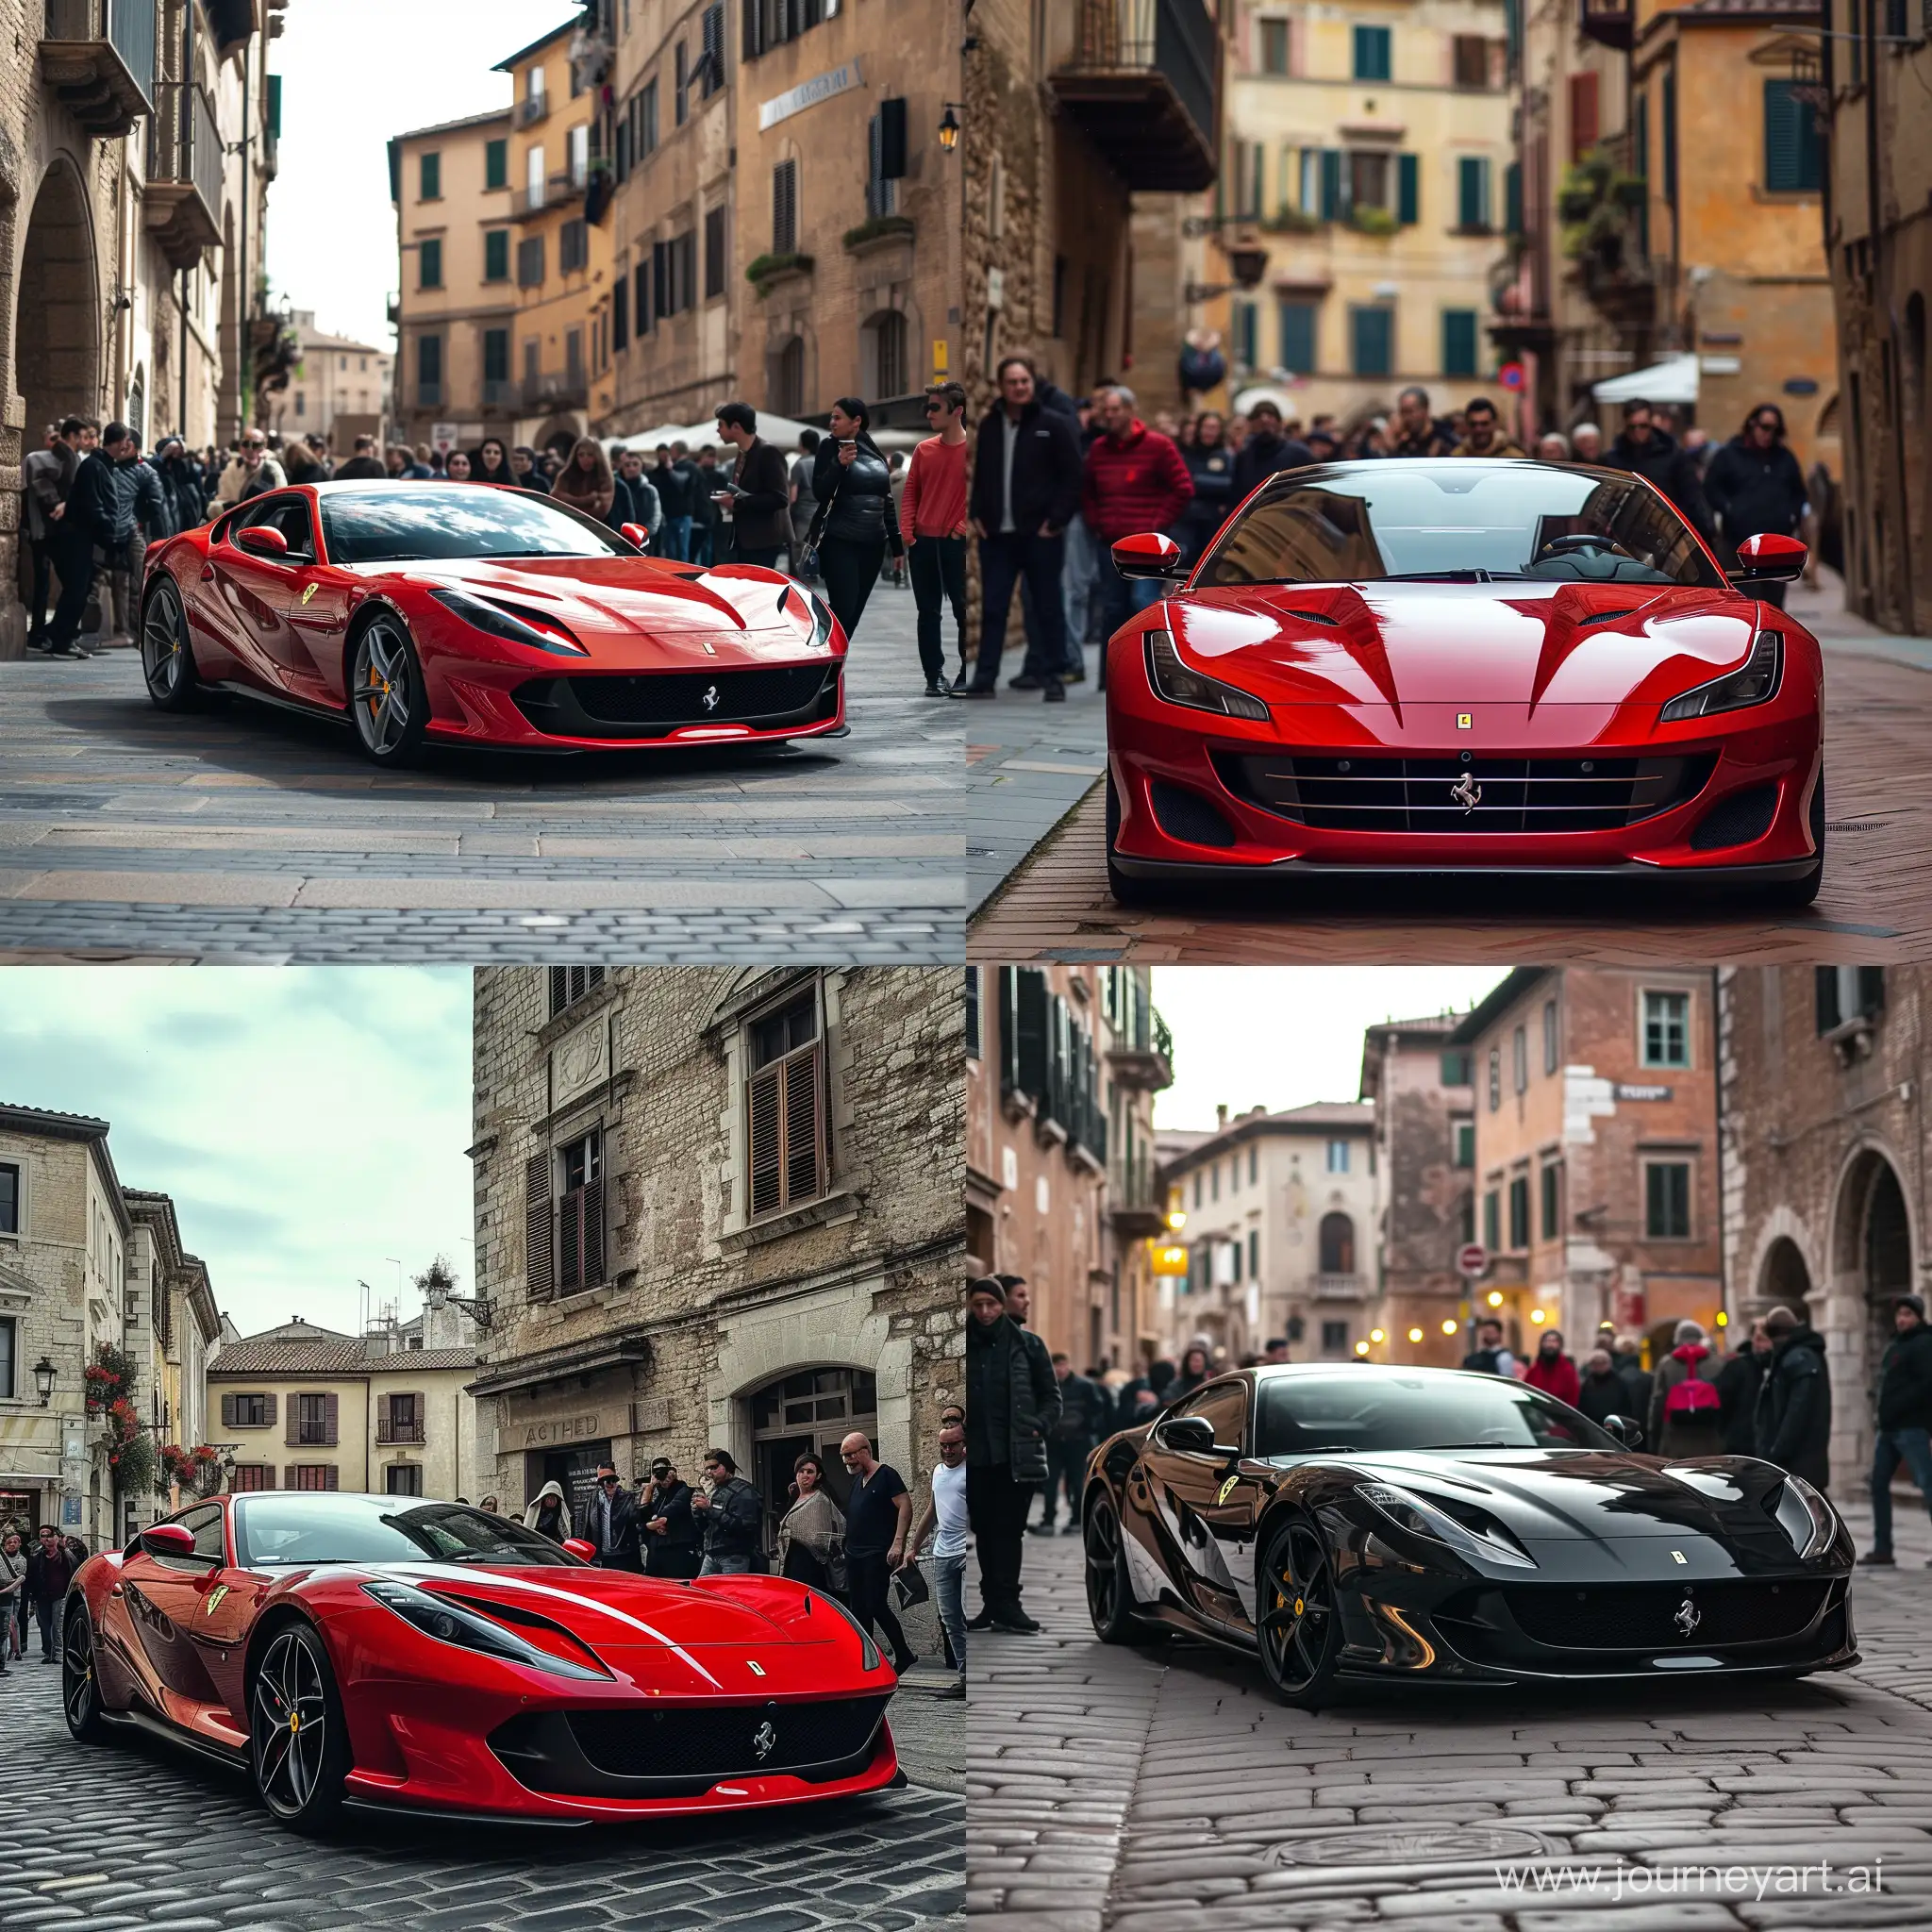 Luxury-Ferrari-Driving-Through-Medieval-City-Streets